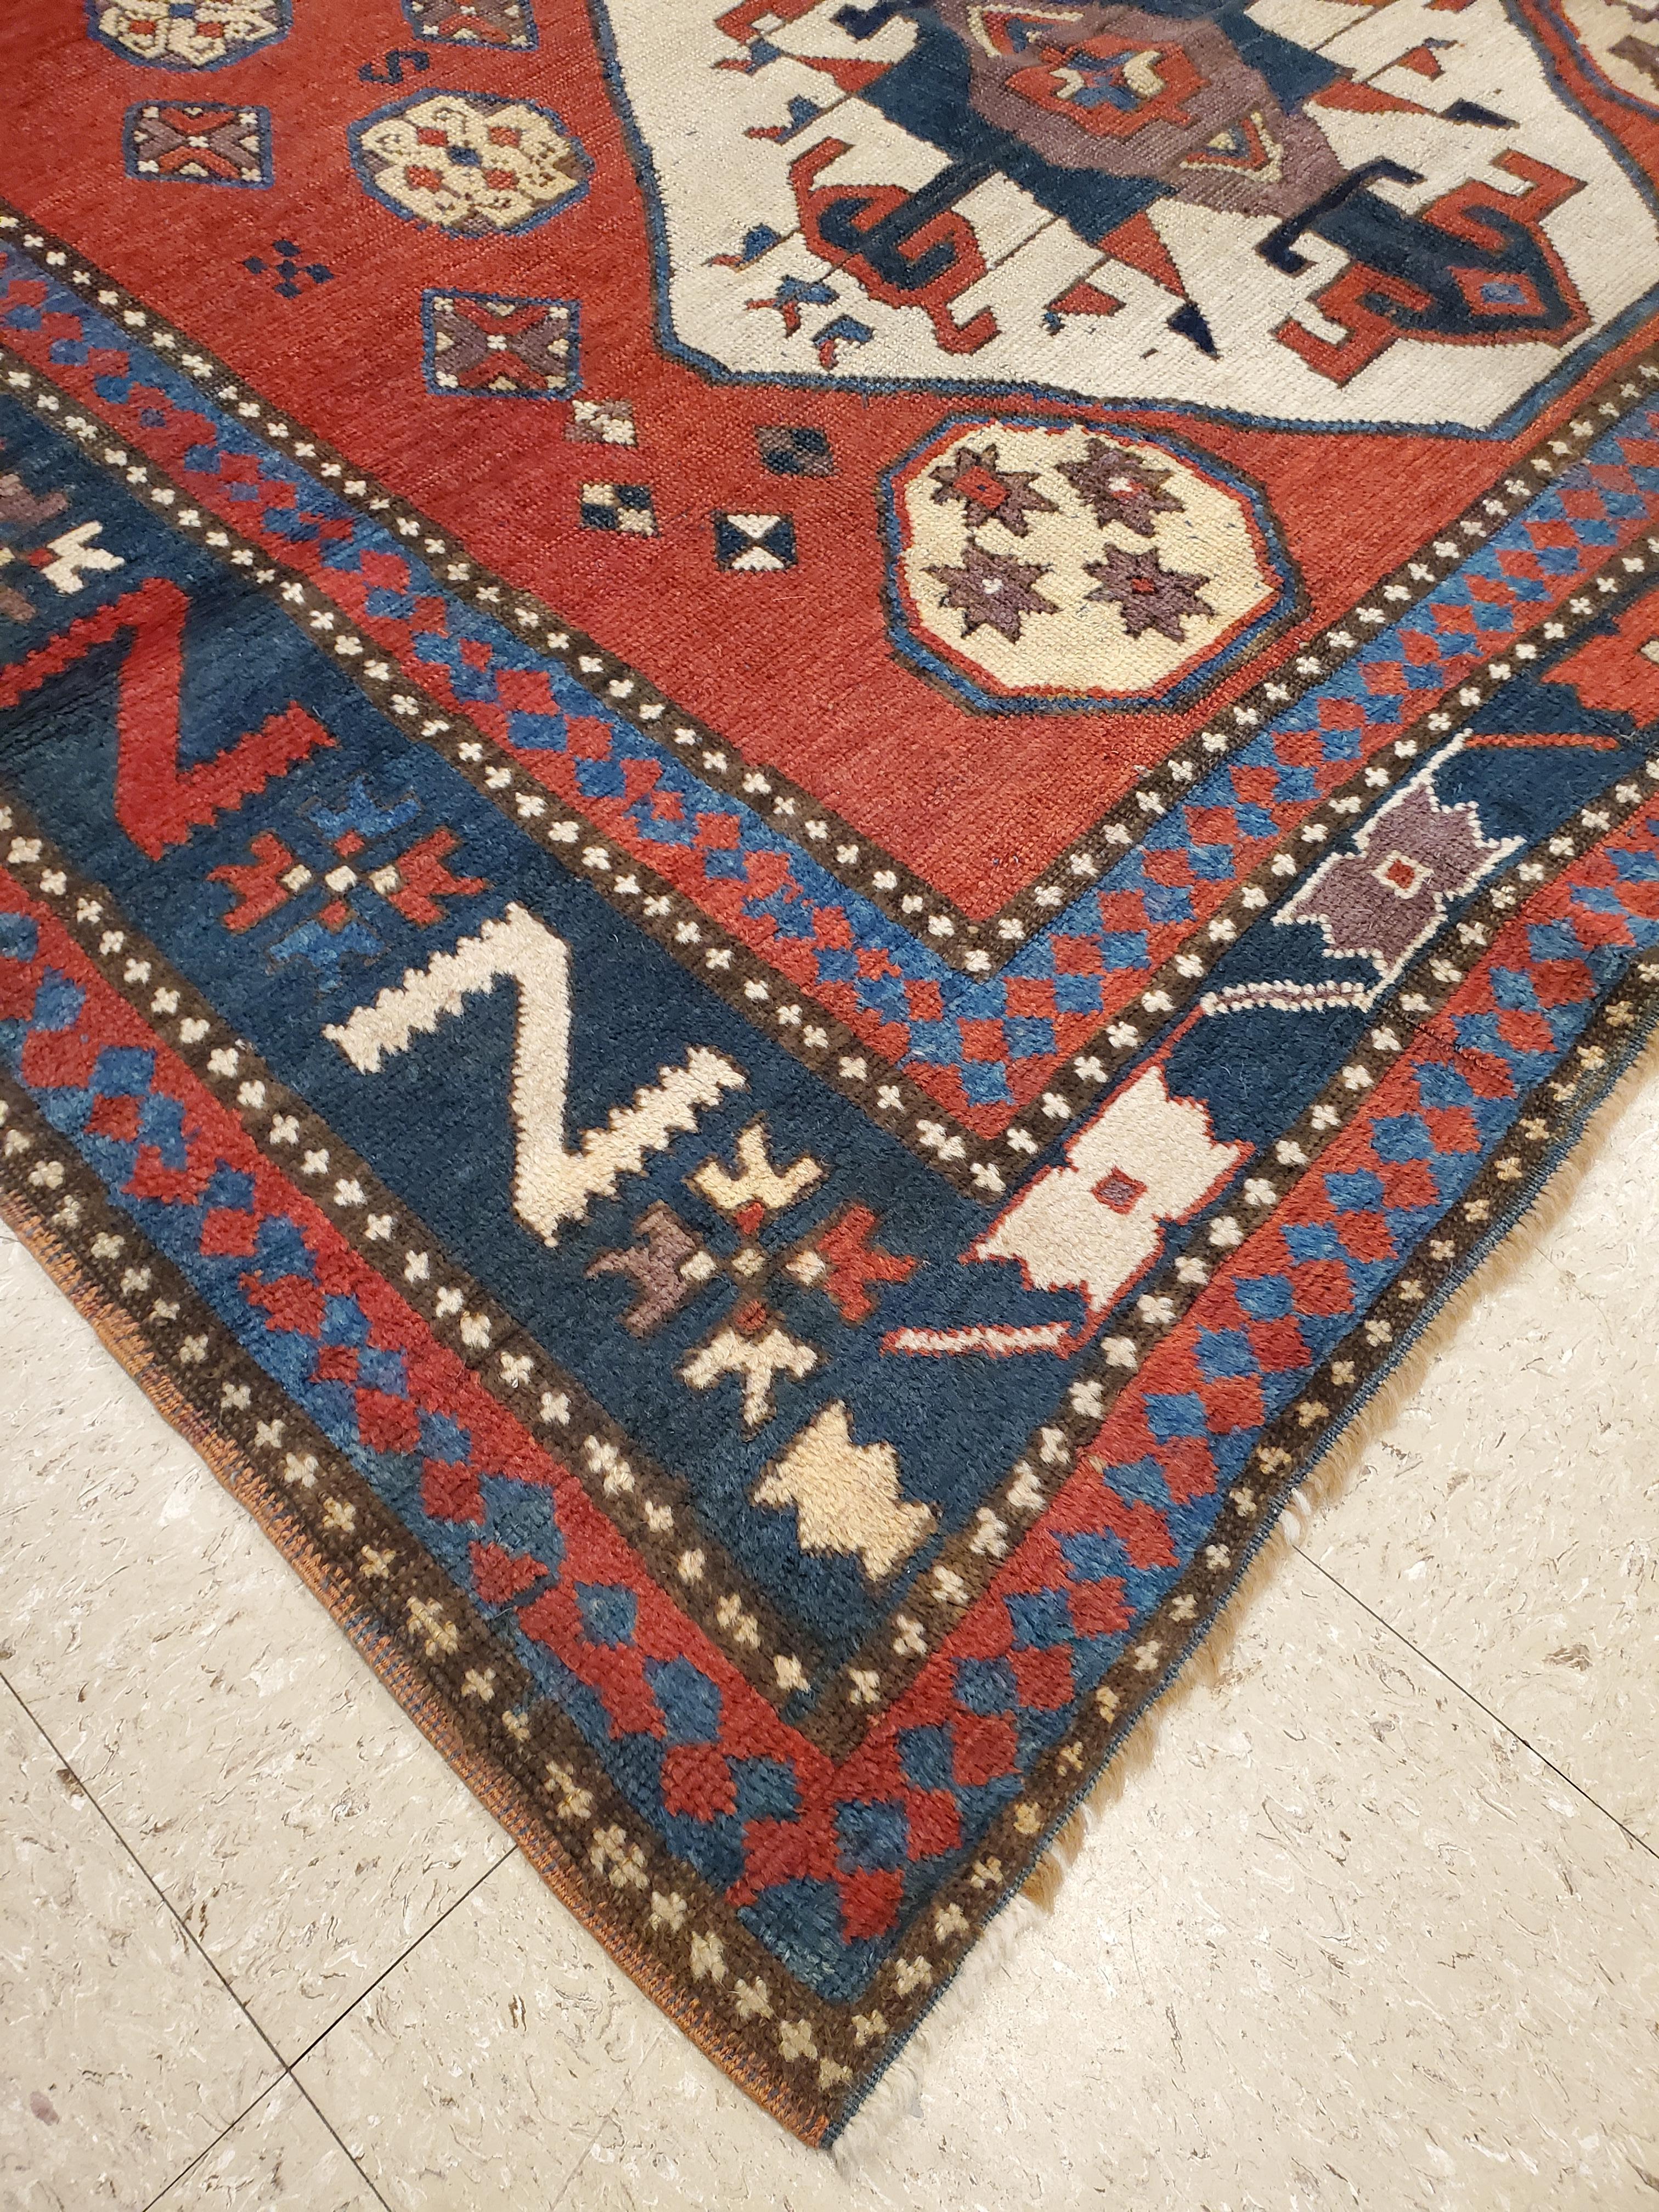 Antique Kazak Carpet, Handmade Wool, Rust, Ivory, Navy, Light Blue and Geometric For Sale 3